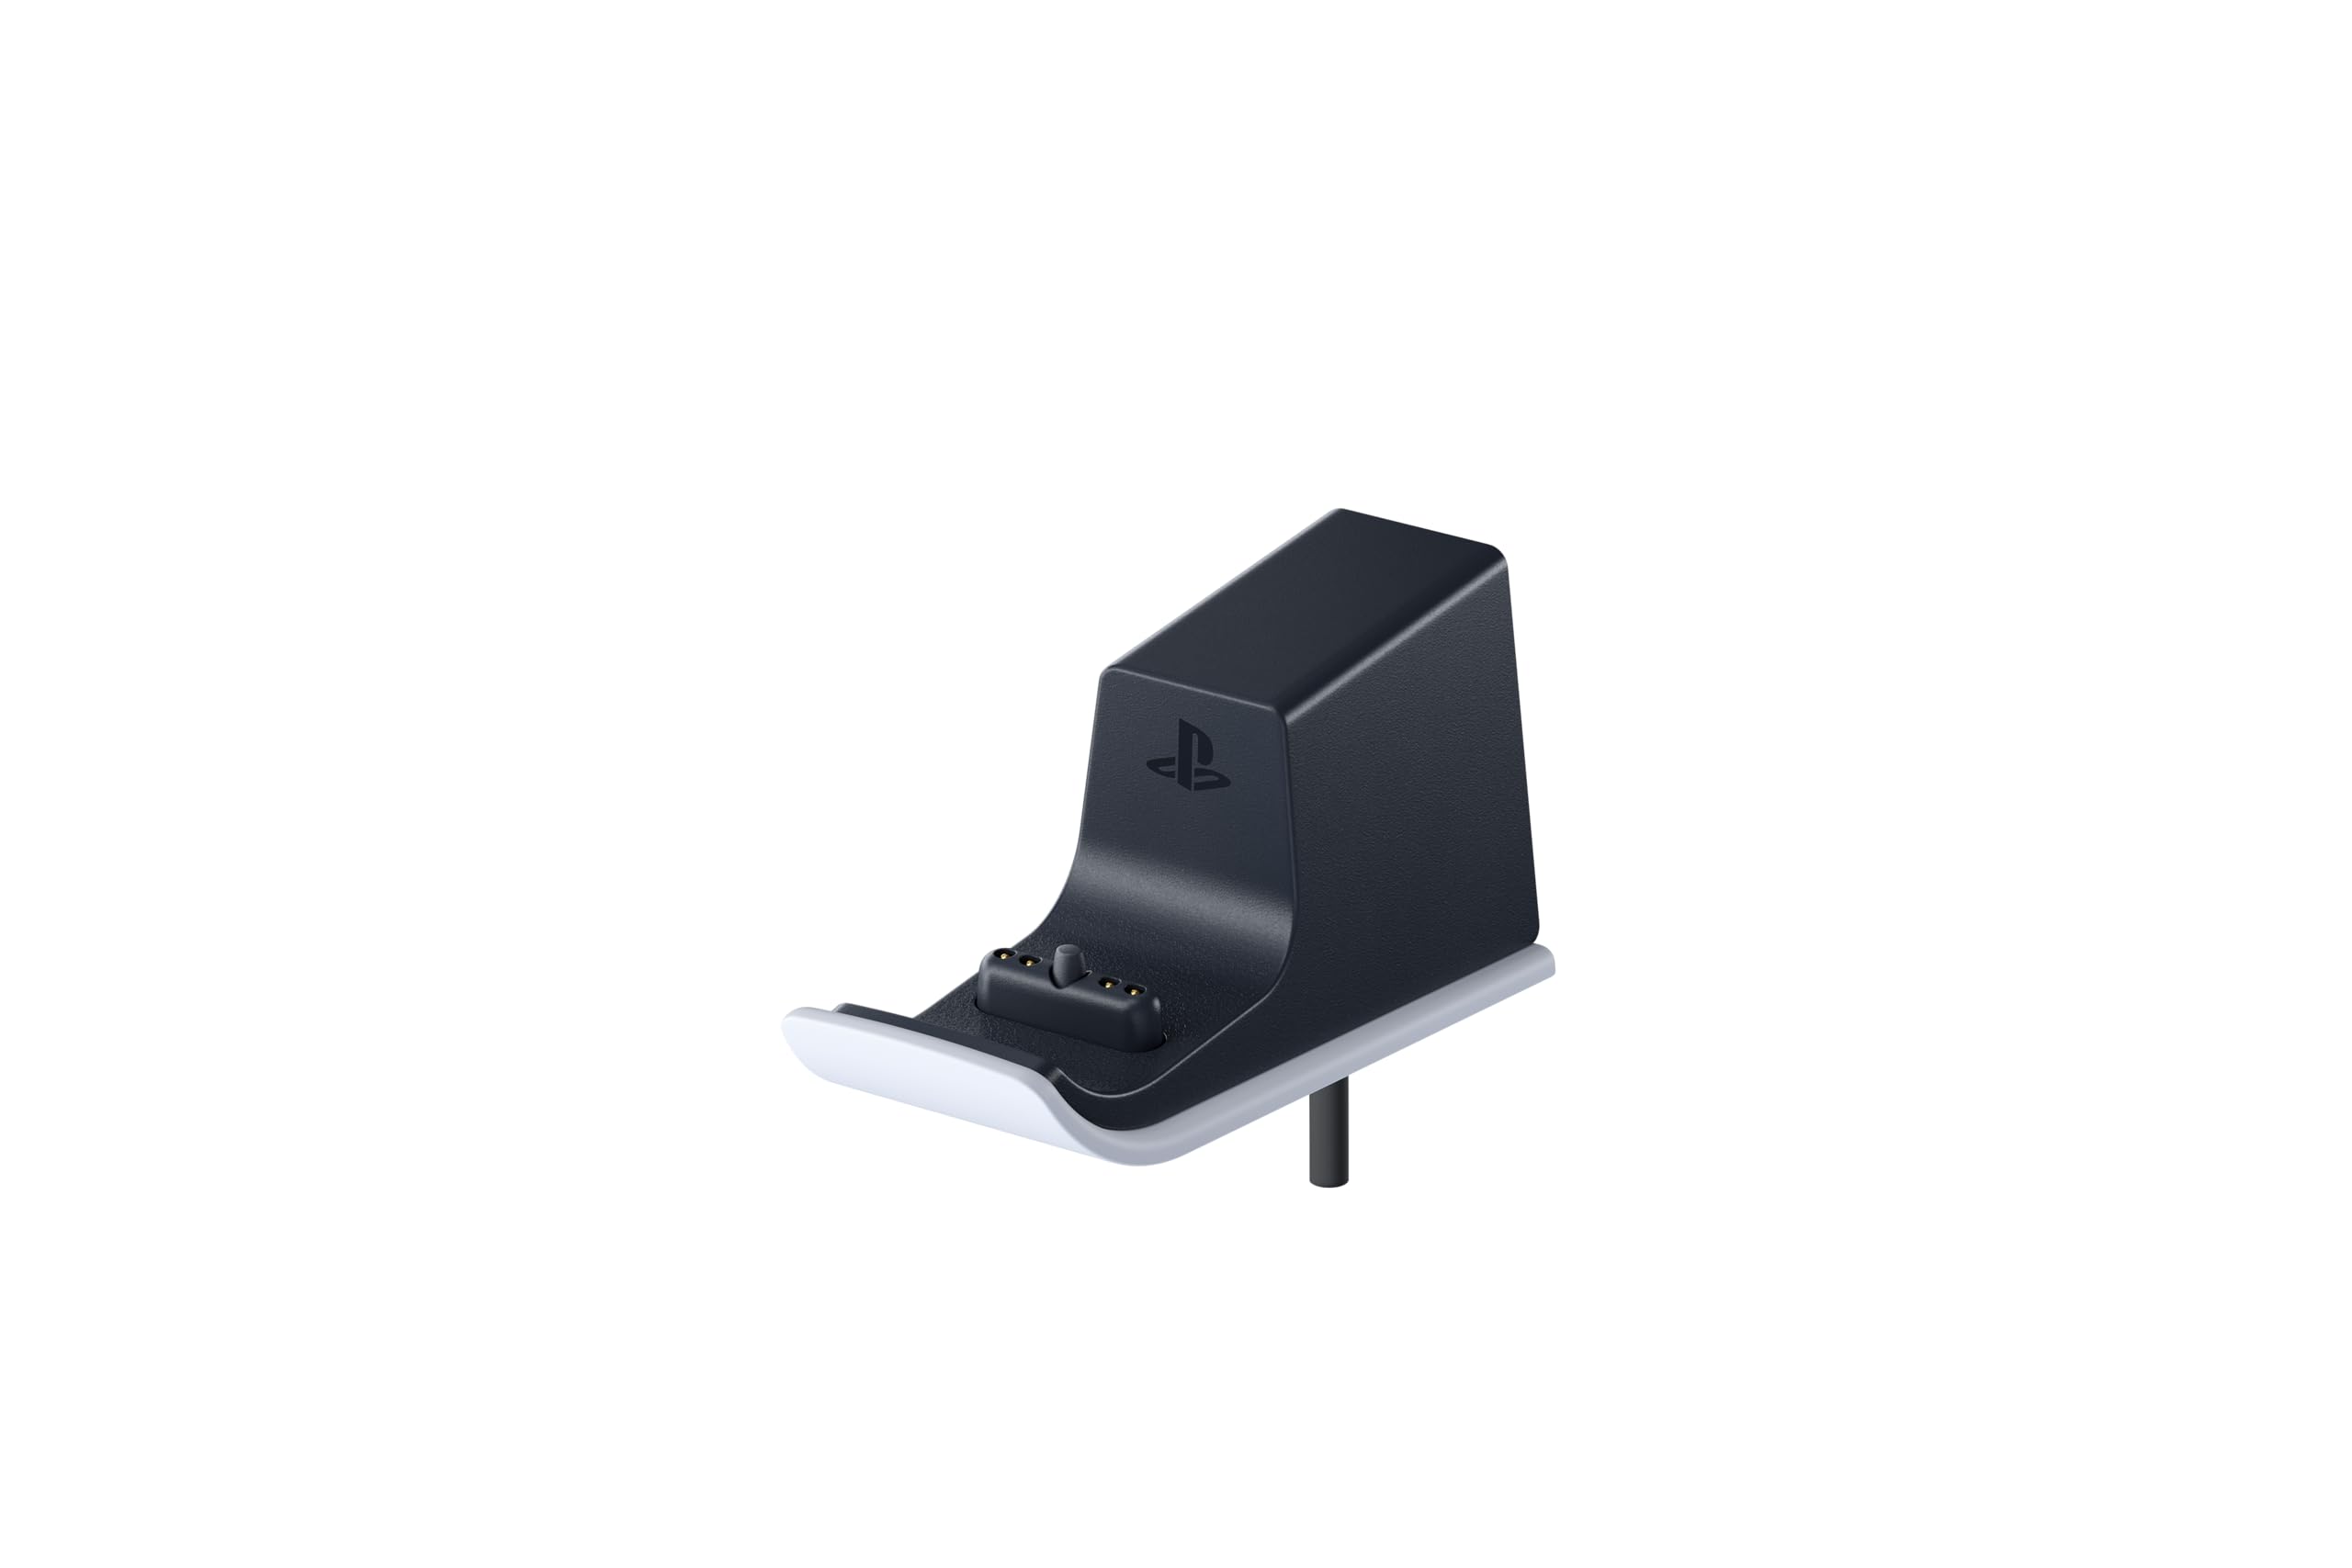 PlayStation Pulse Elite Wireless Headset - (PS5) PlayStation 5 Video Games PlayStation   